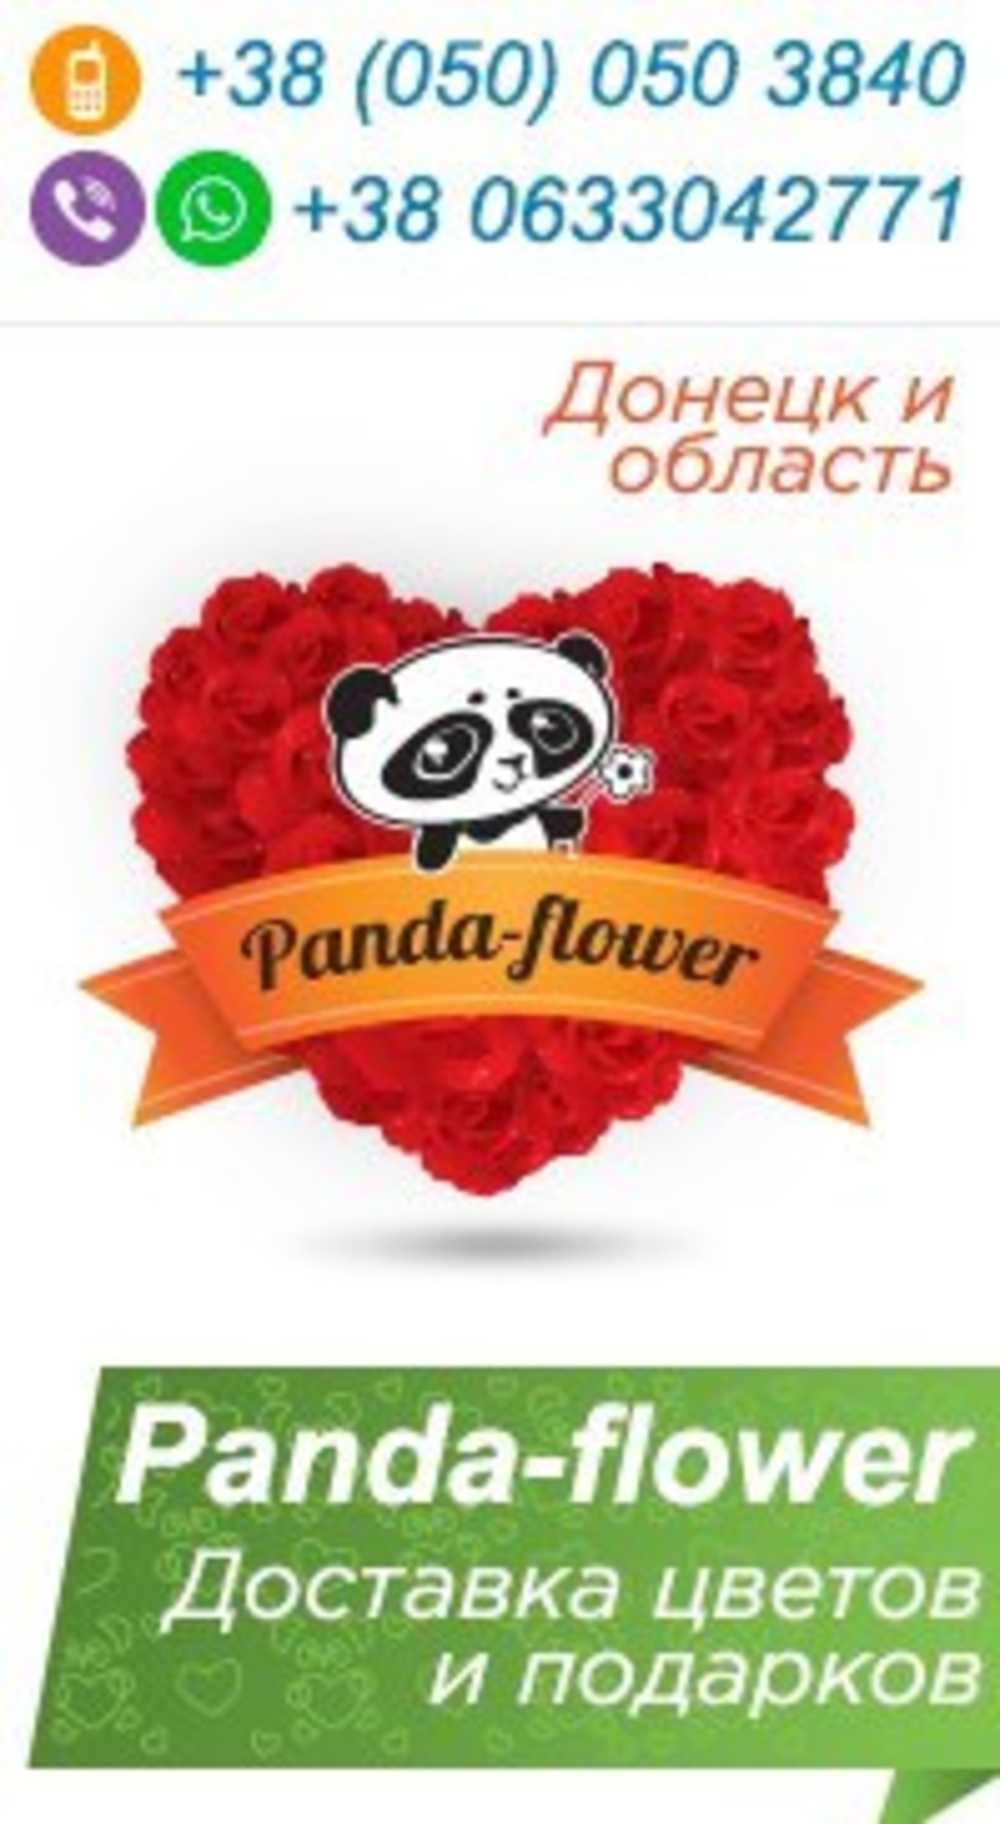 Салон «Panda-flower»